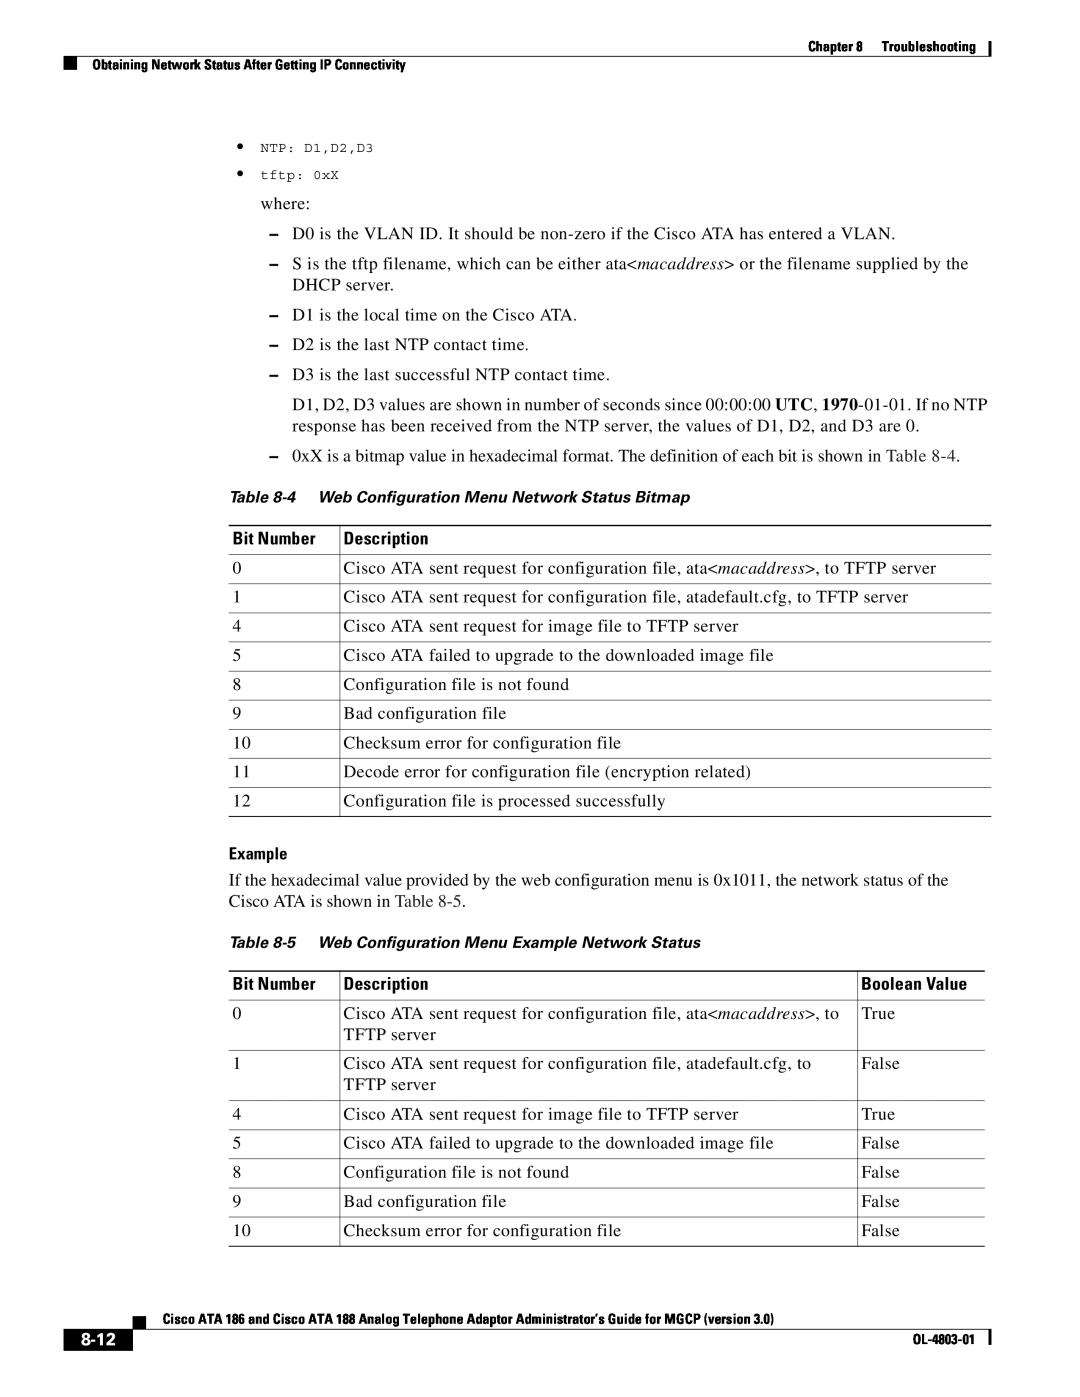 Cisco Systems ATA 186, ATA 188 manual 8-12, Bit Number, Description, Example 